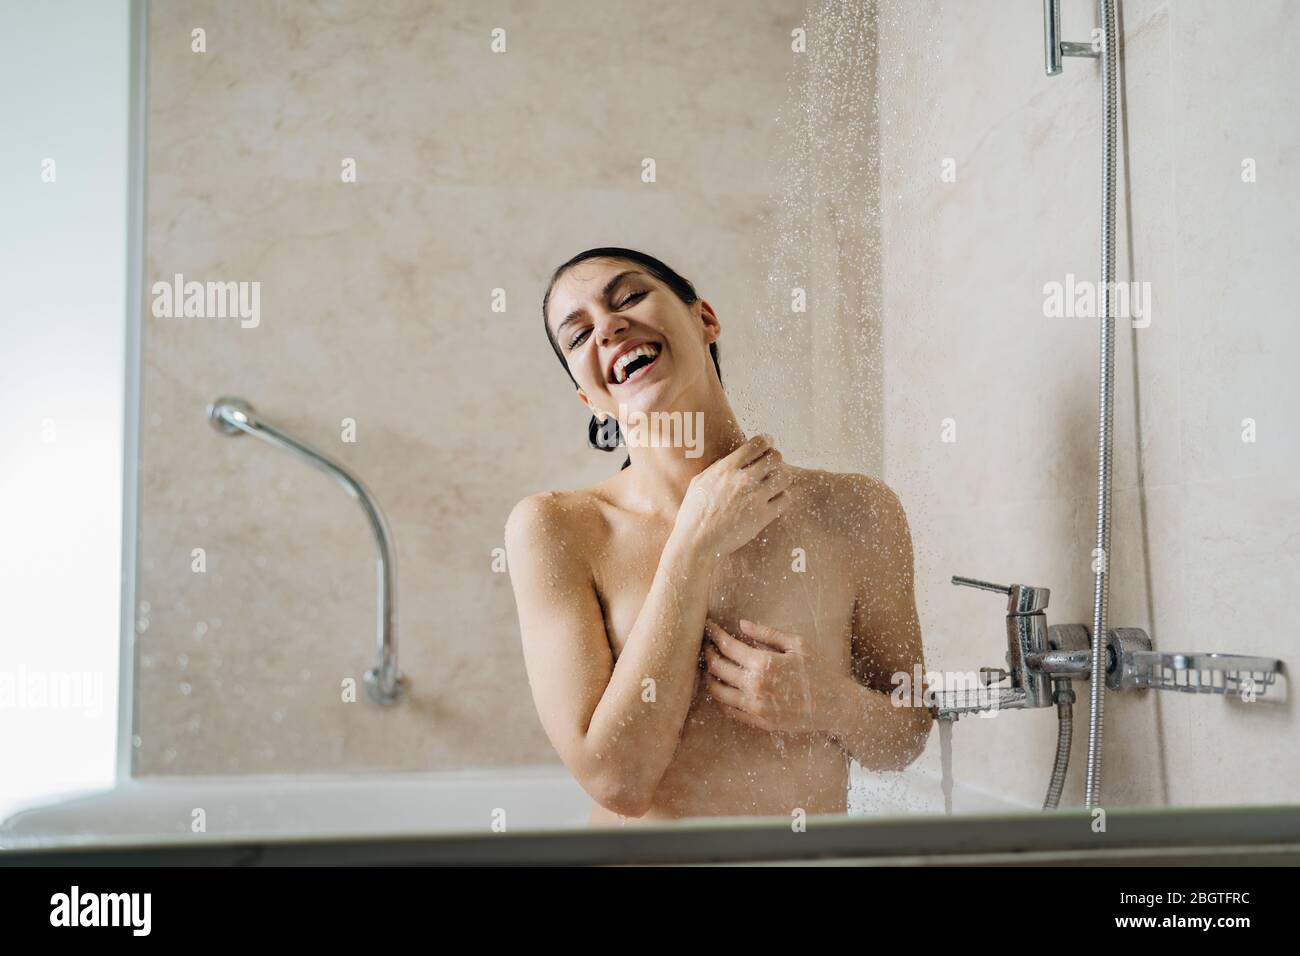 Hot Girl Taking A Shower